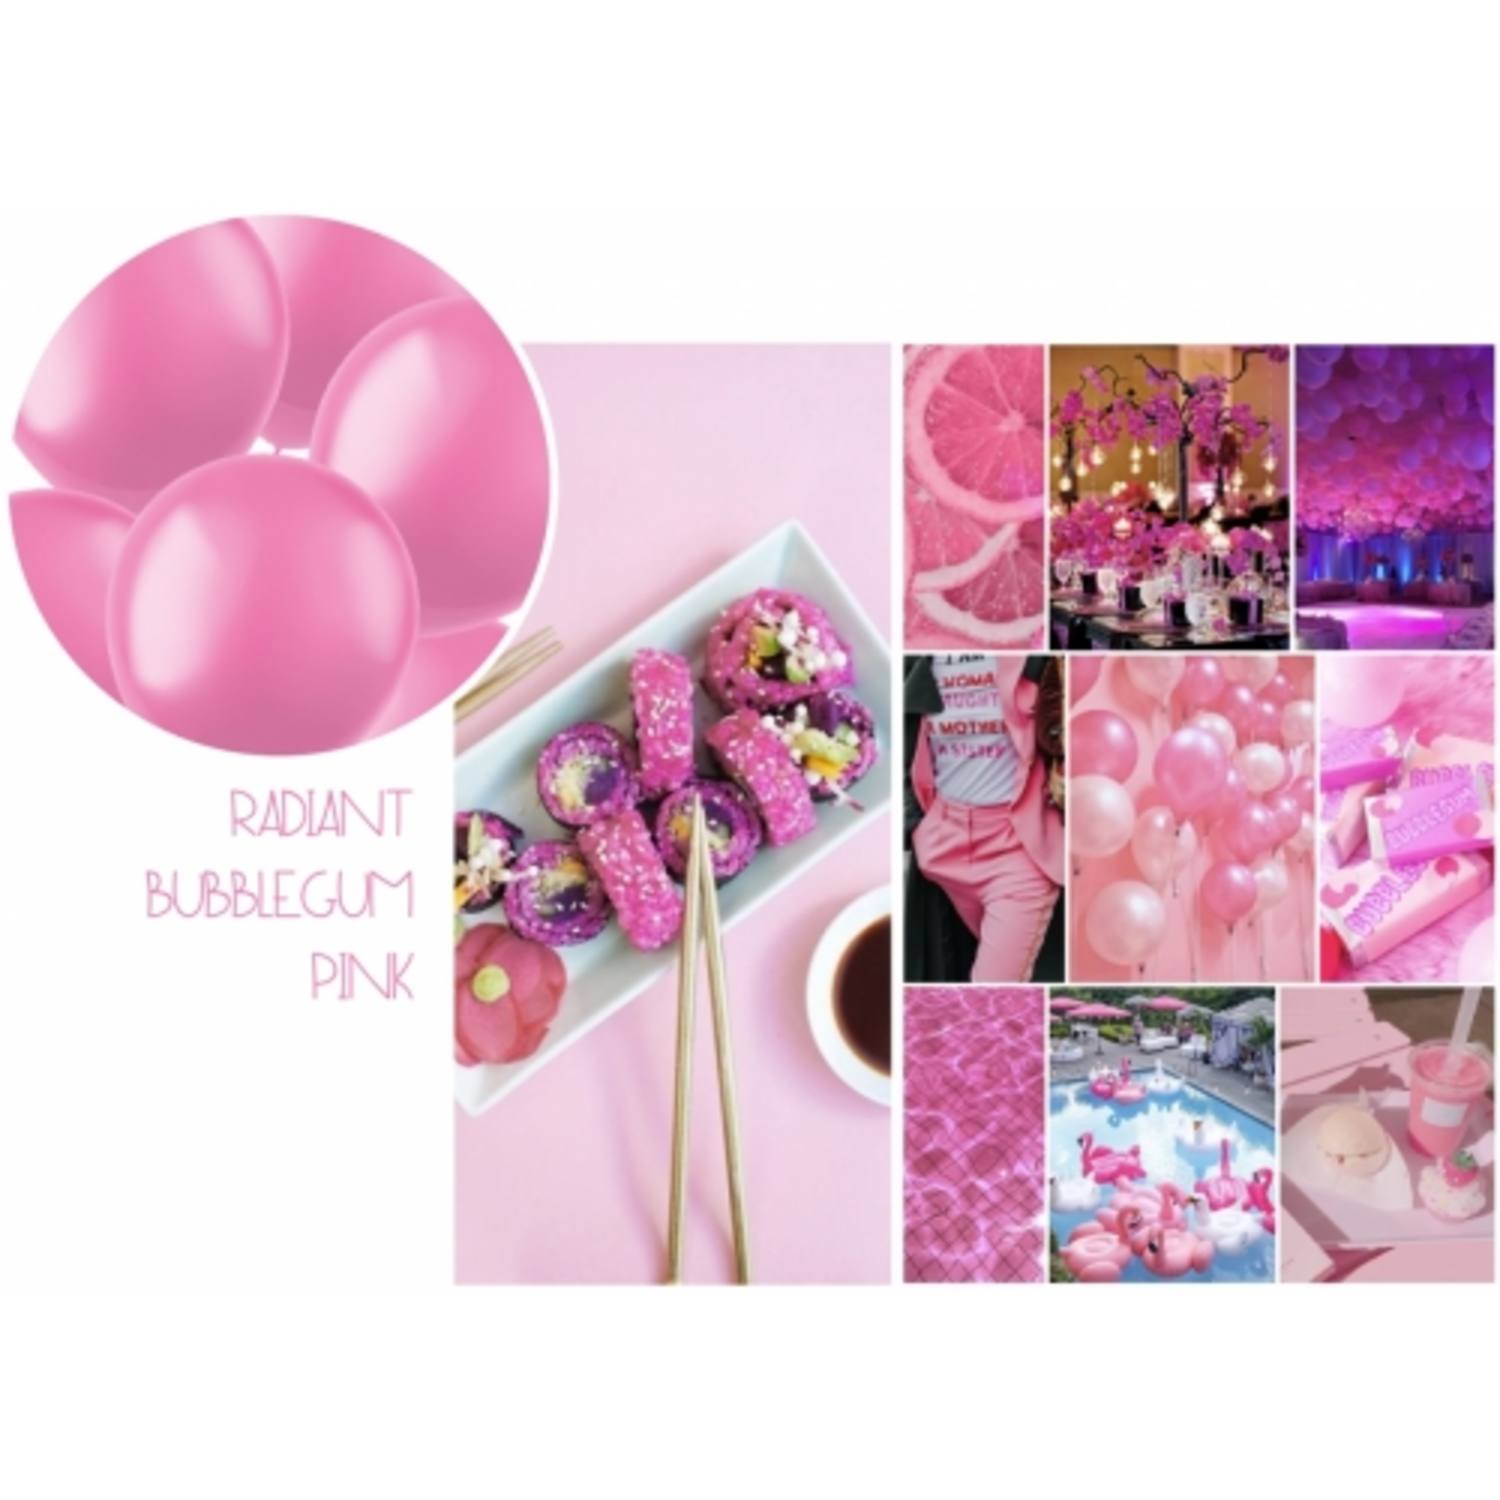 Balloon XL Radiant Bubblegum Pink Metallic - 78 cm 2